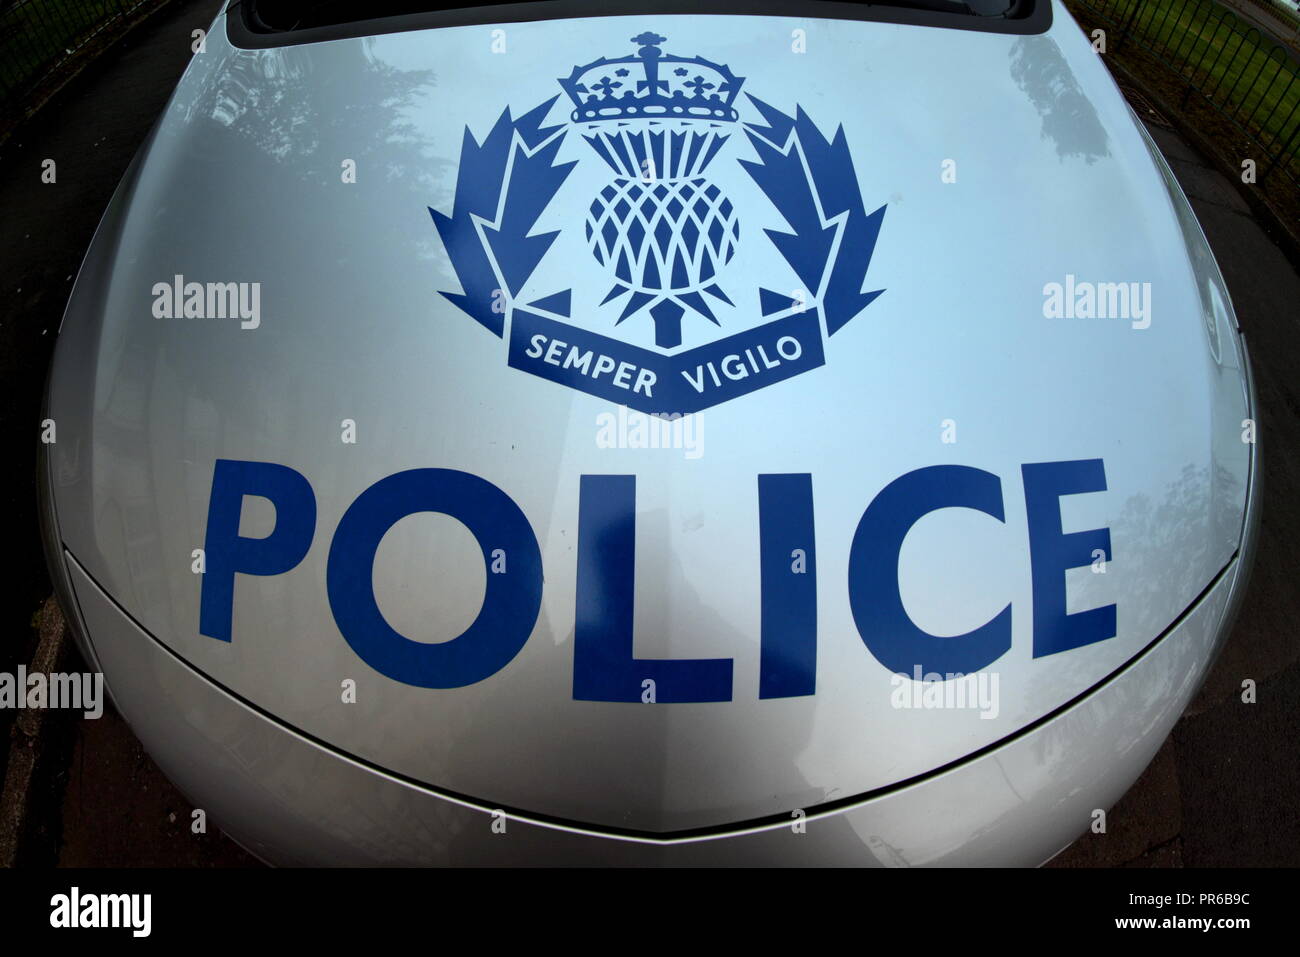 smiling smirking mouth bonnet of police car police Scotland logos logo on hood of police car Stock Photo